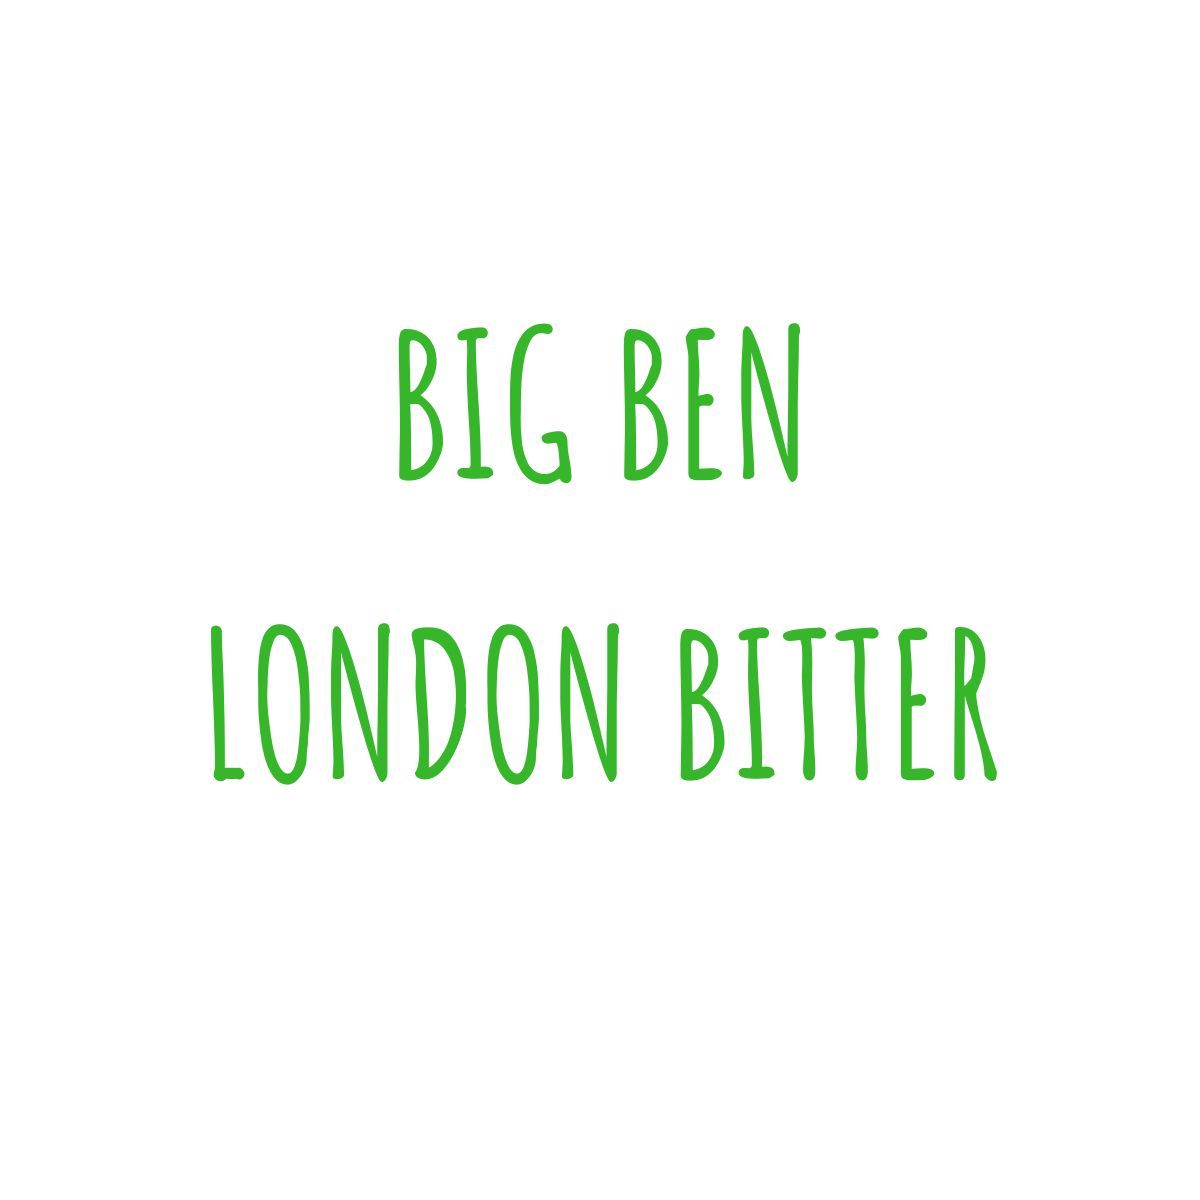 Big Ben - London Bitter by MashCamp